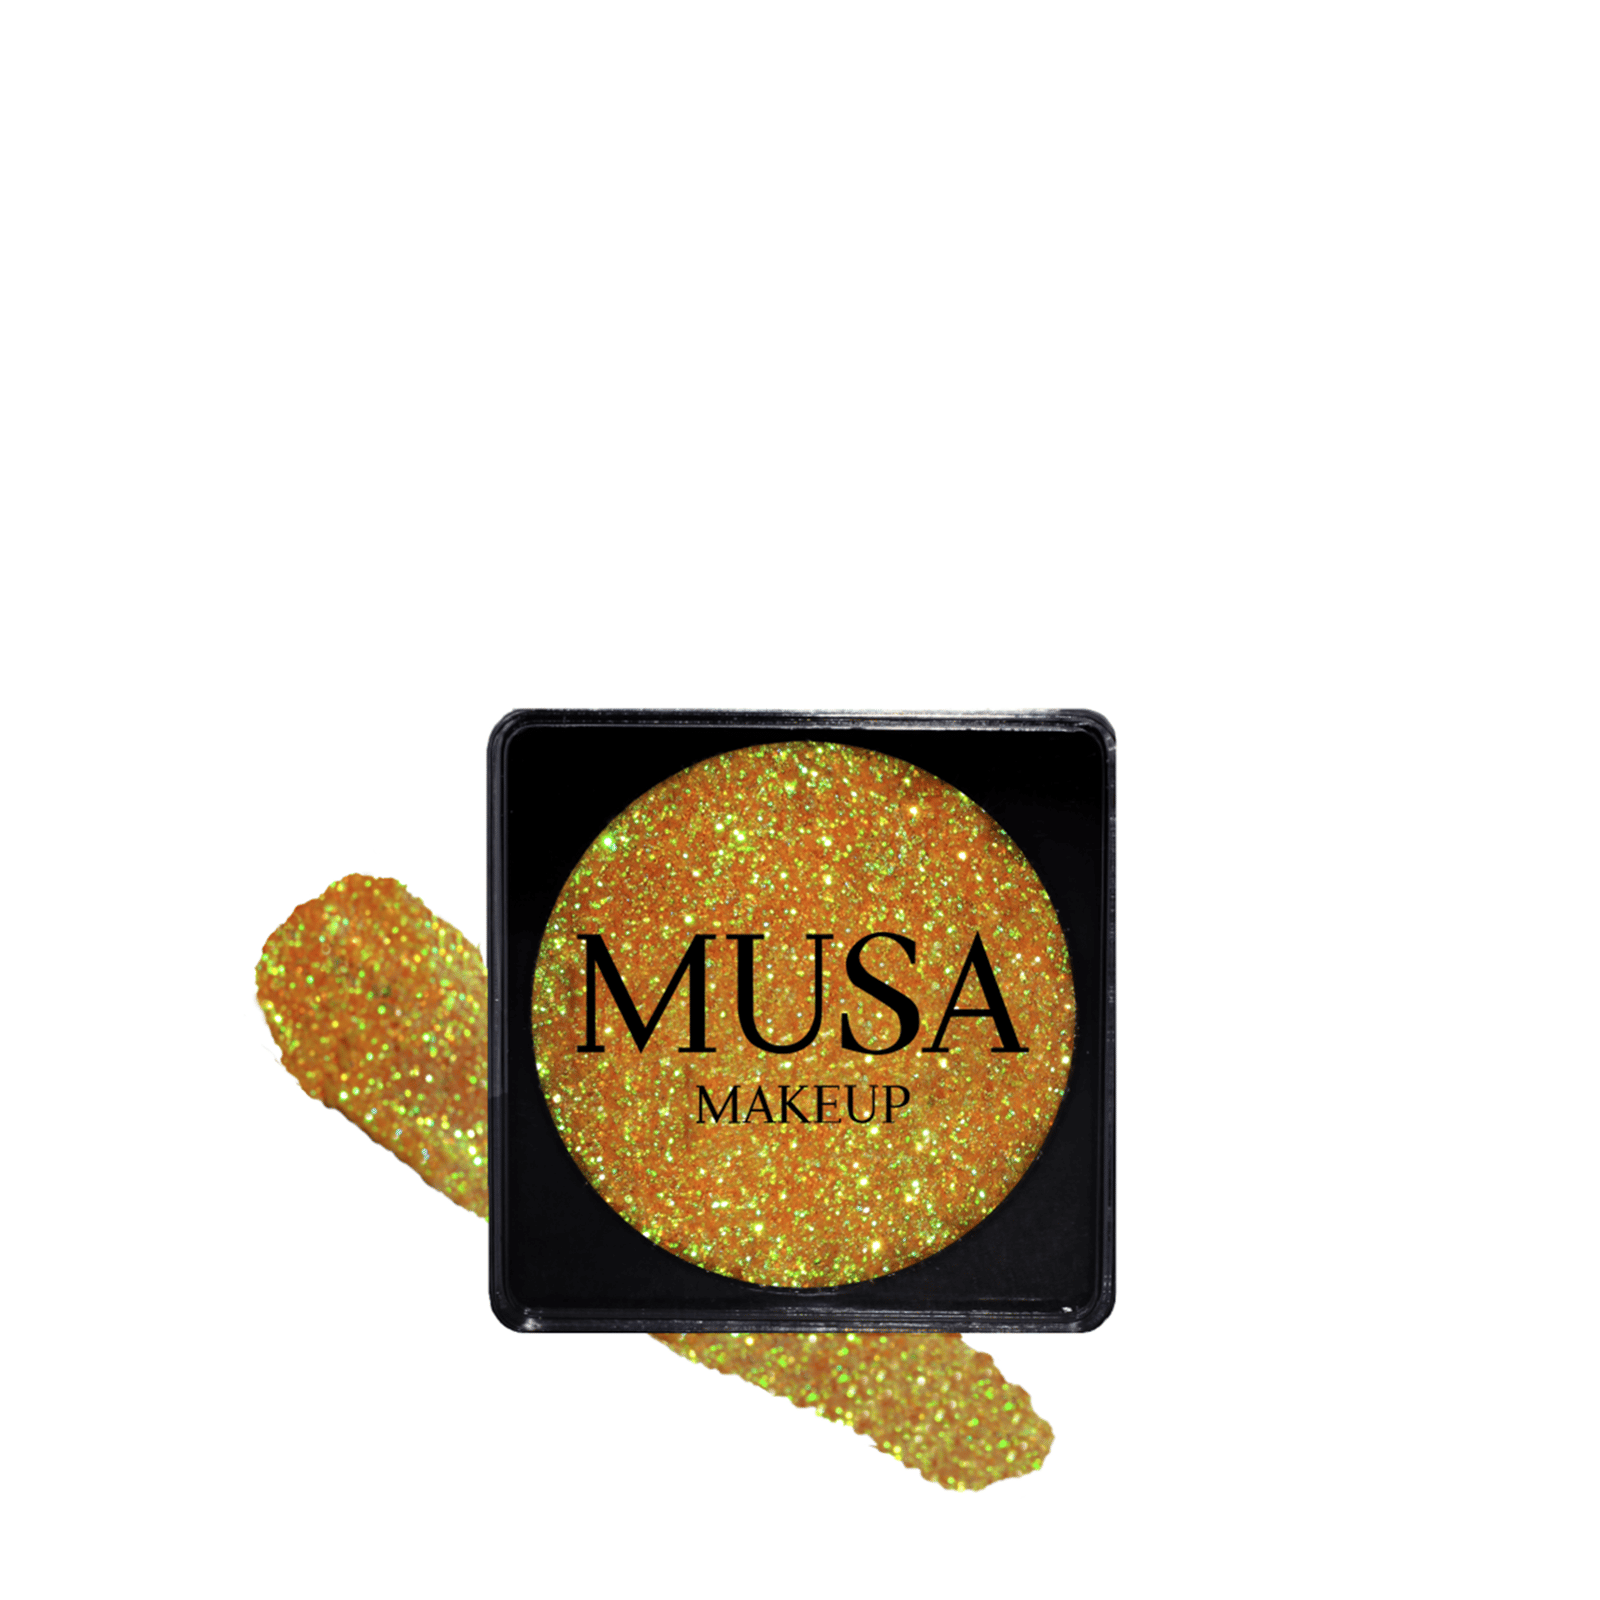 MUSA Makeup Creamy Glitter Hypnotic 4g (0.14 oz)